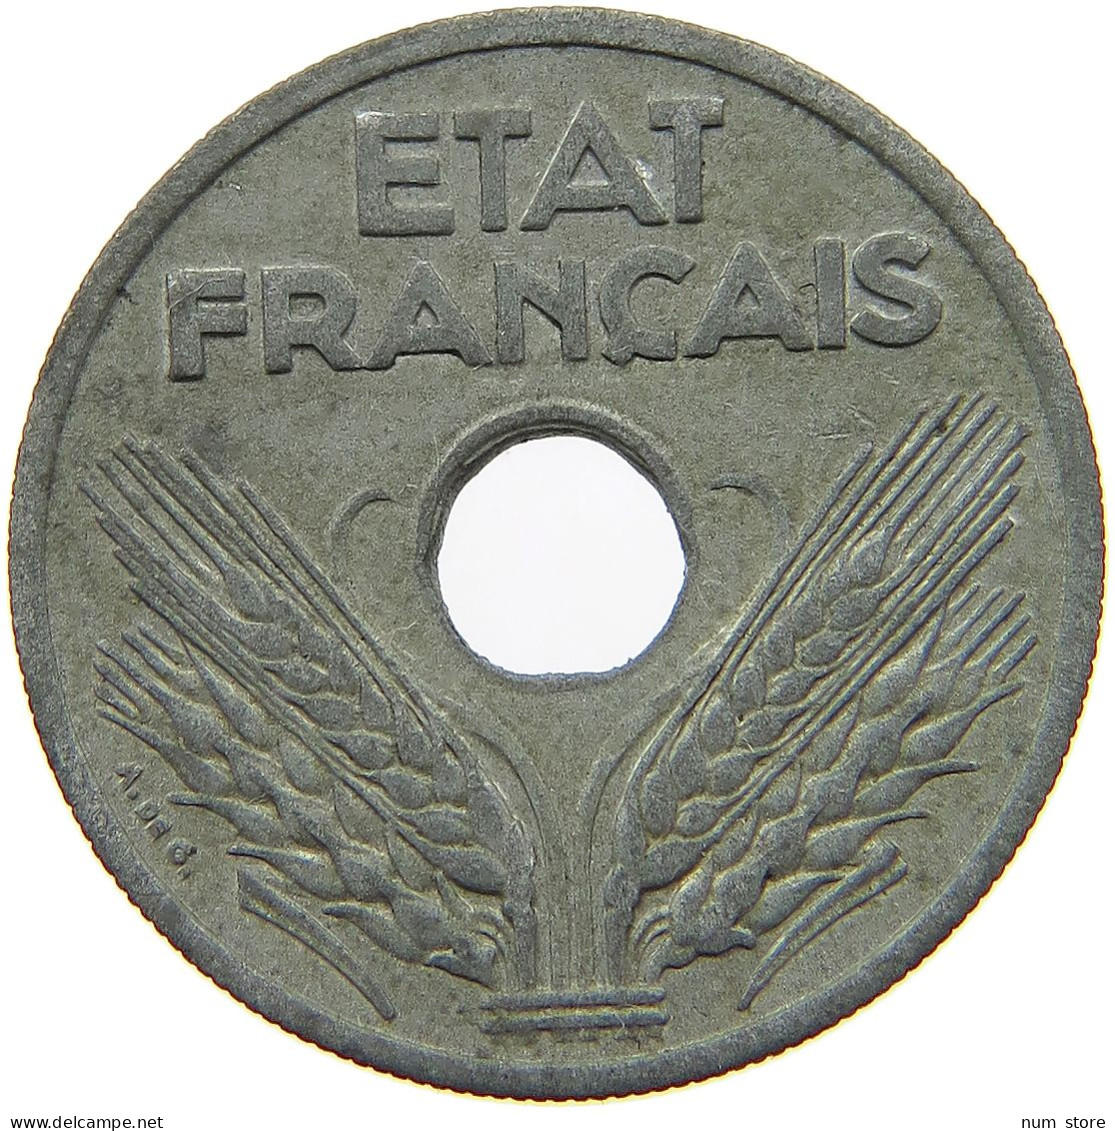 FRANCE 20 CENTIMES 1941 #a006 0195 - 20 Centimes